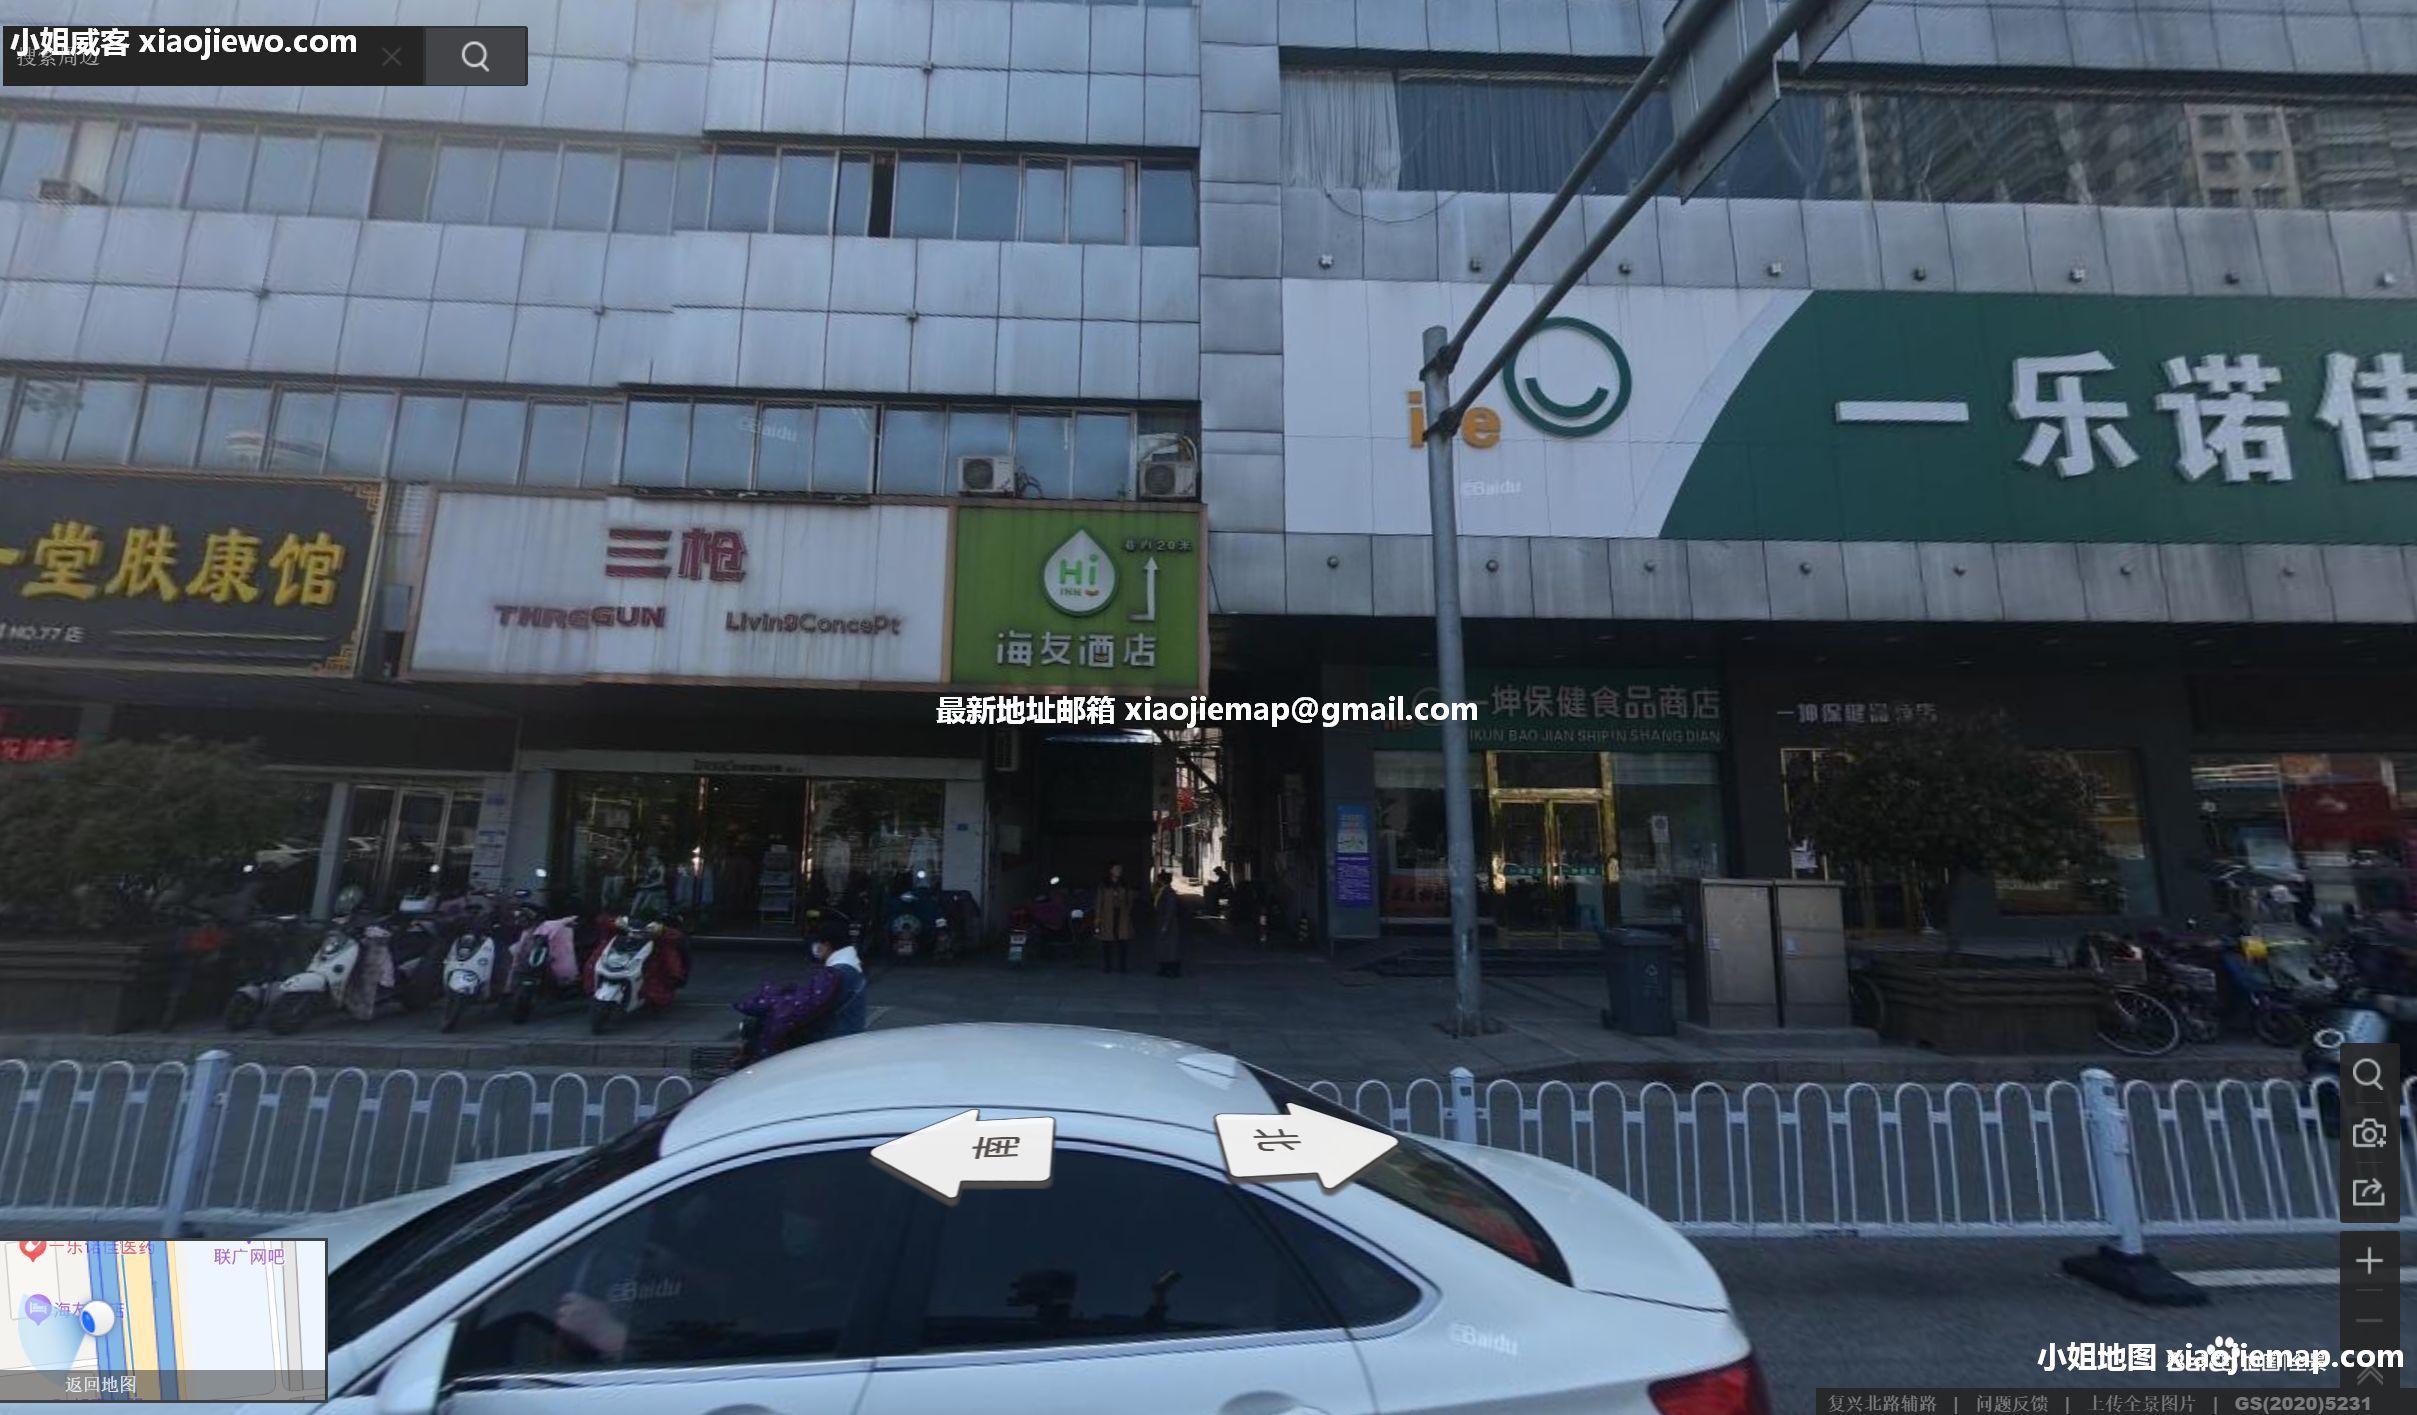 xiaojiewo.com―小姐威客网2023―徐州火车站附近黑店被坑记